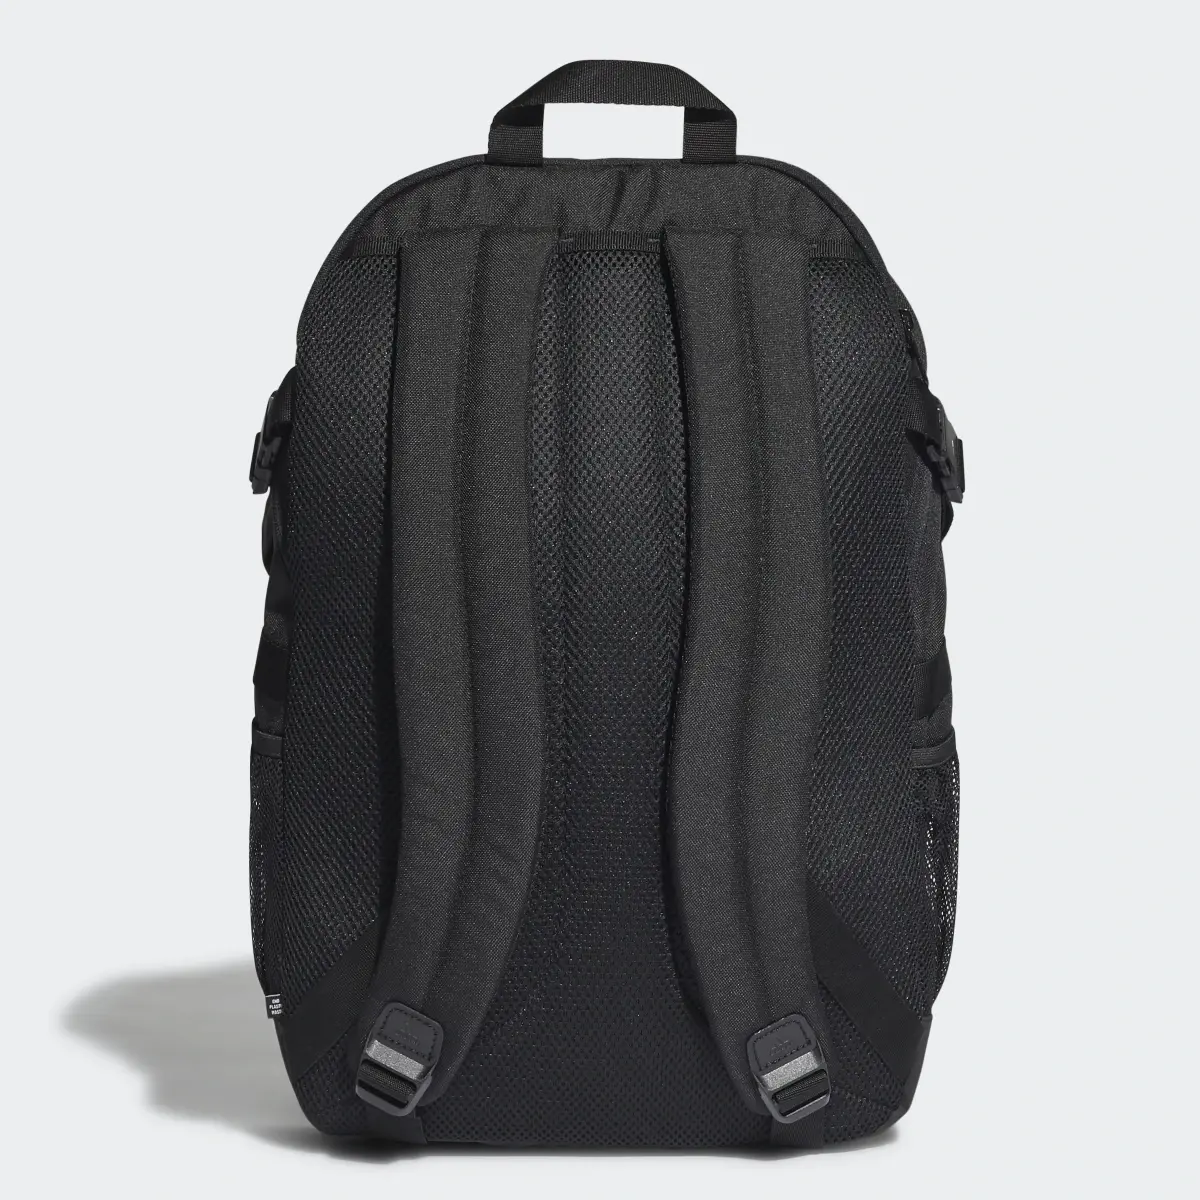 Adidas Power VI Backpack. 3